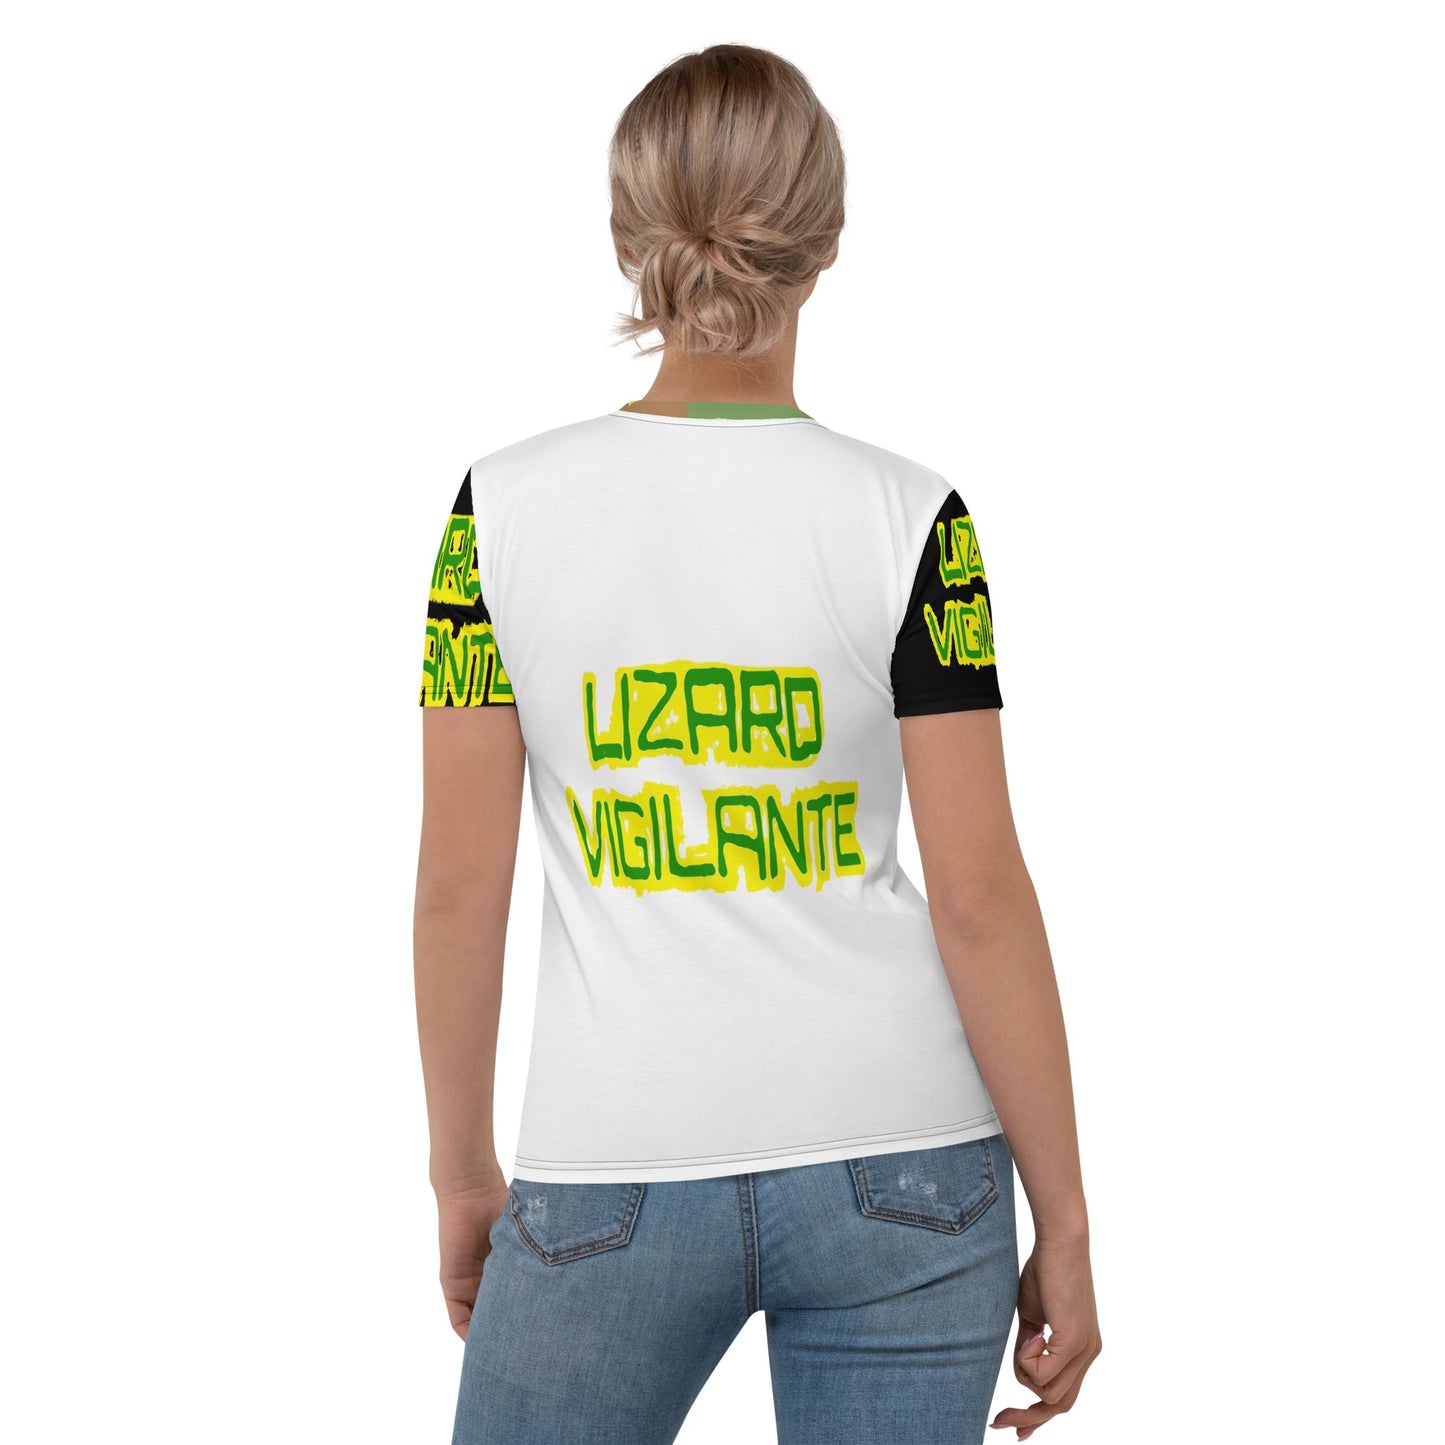 Lizard Vigilante Logoo Camo Women's T-shirt - Lizard Vigilante